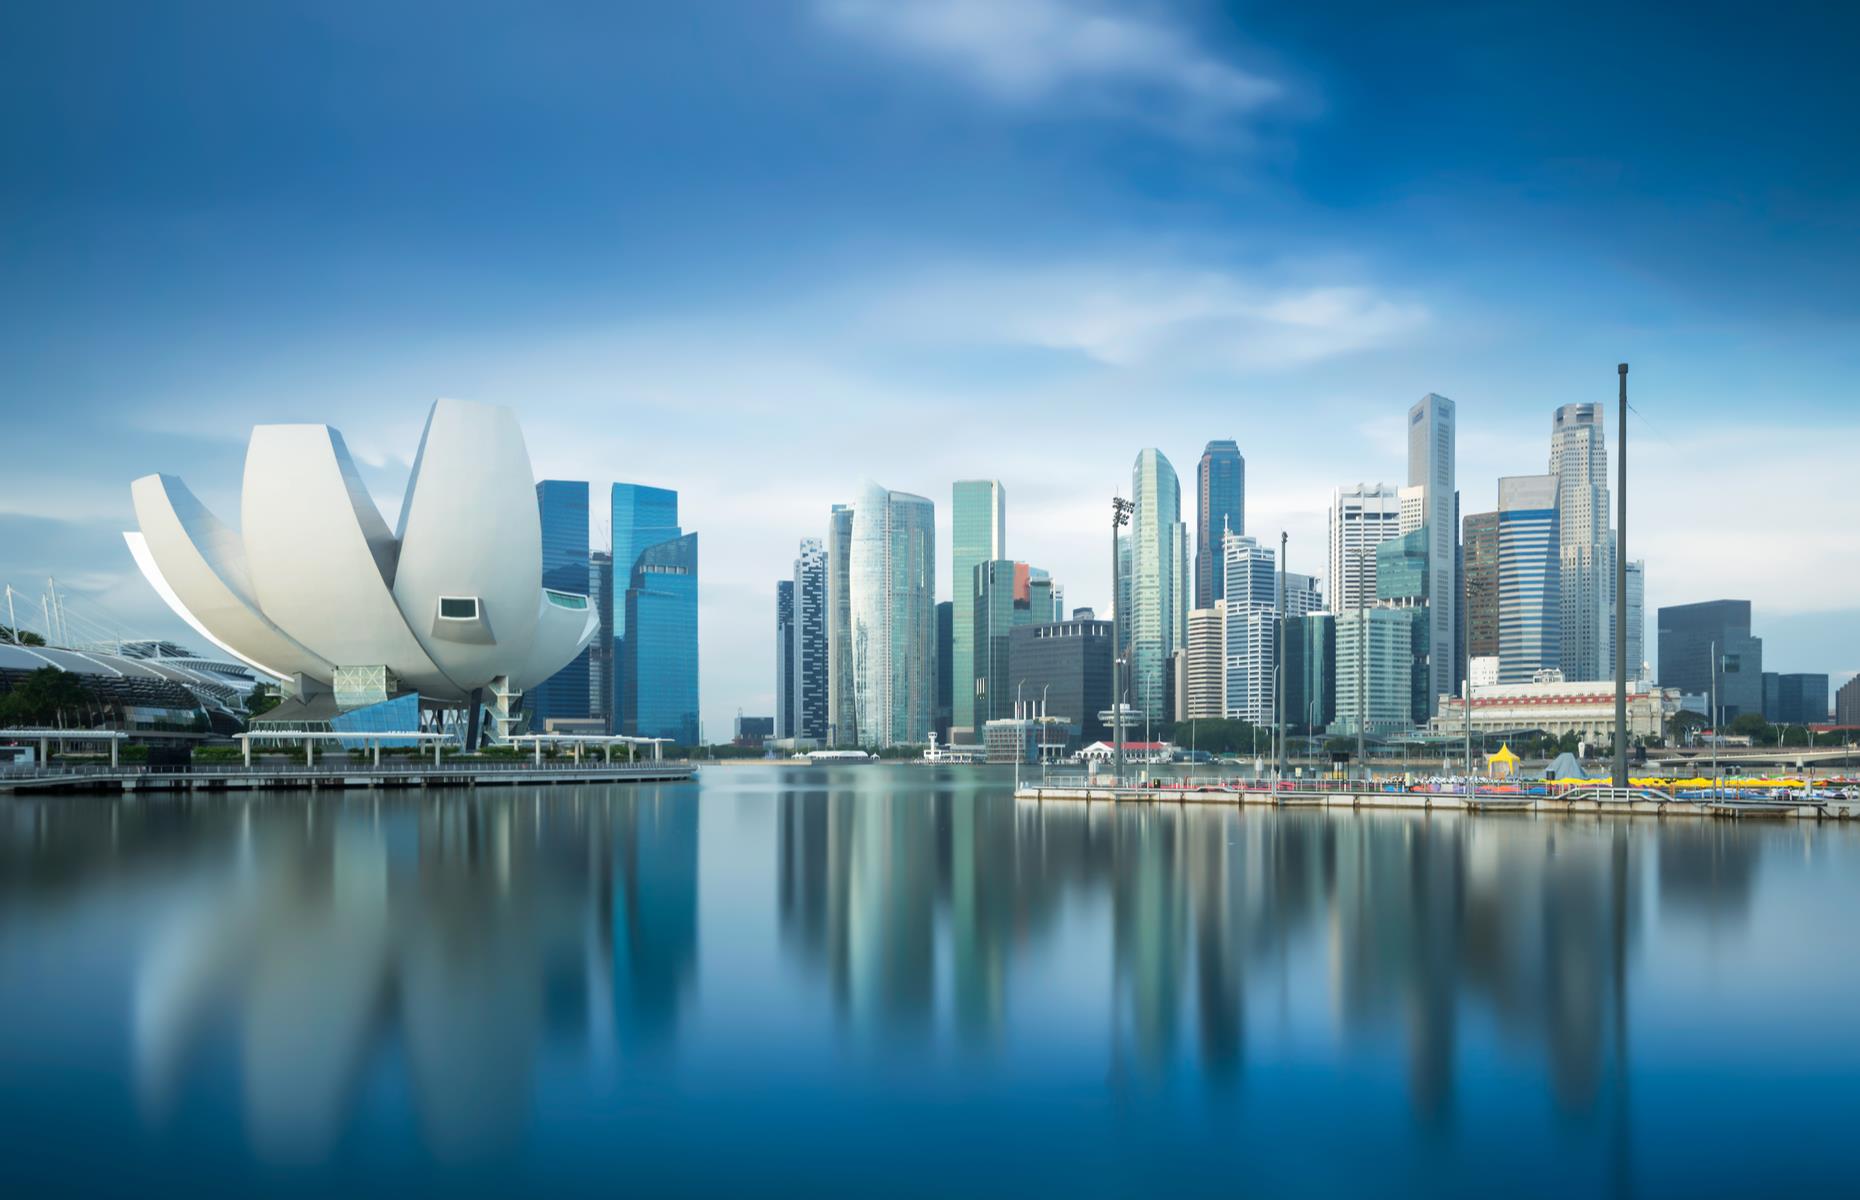 13. Singapore – Median wealth: $96,967